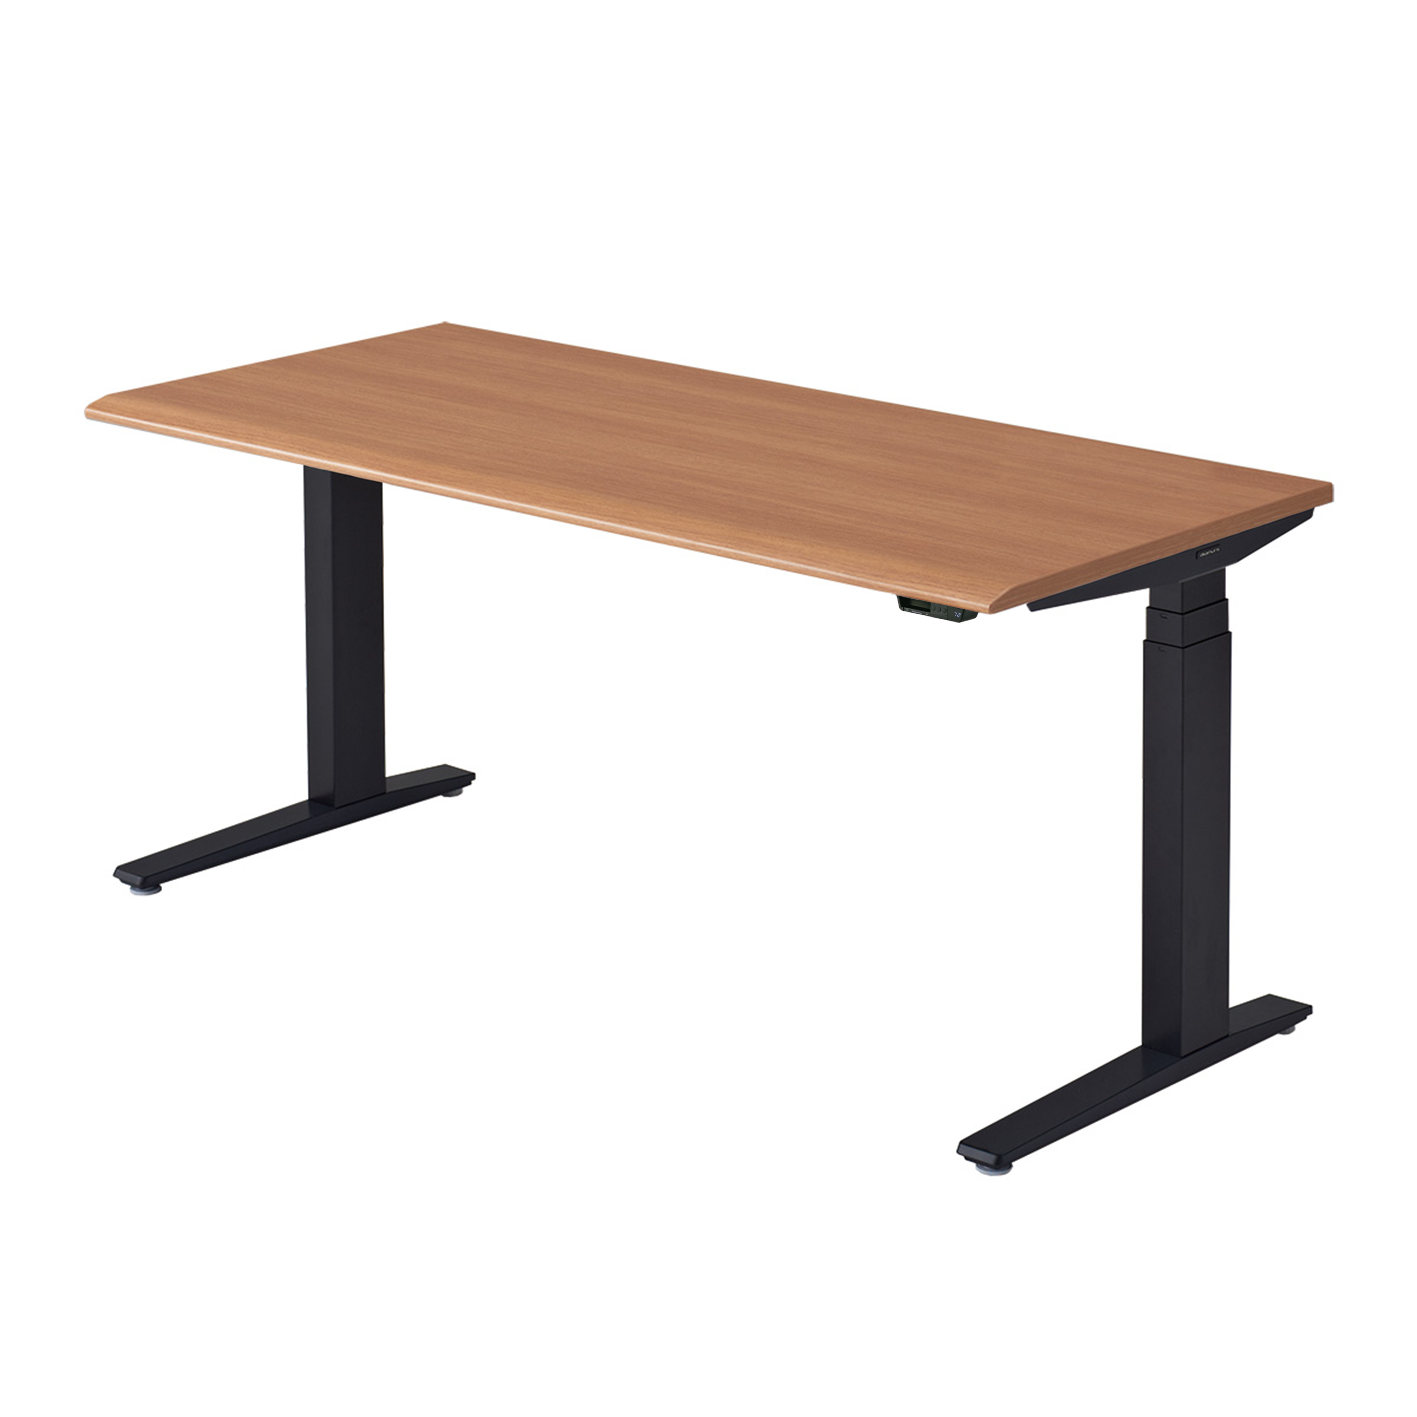 Standard desk in medium wood